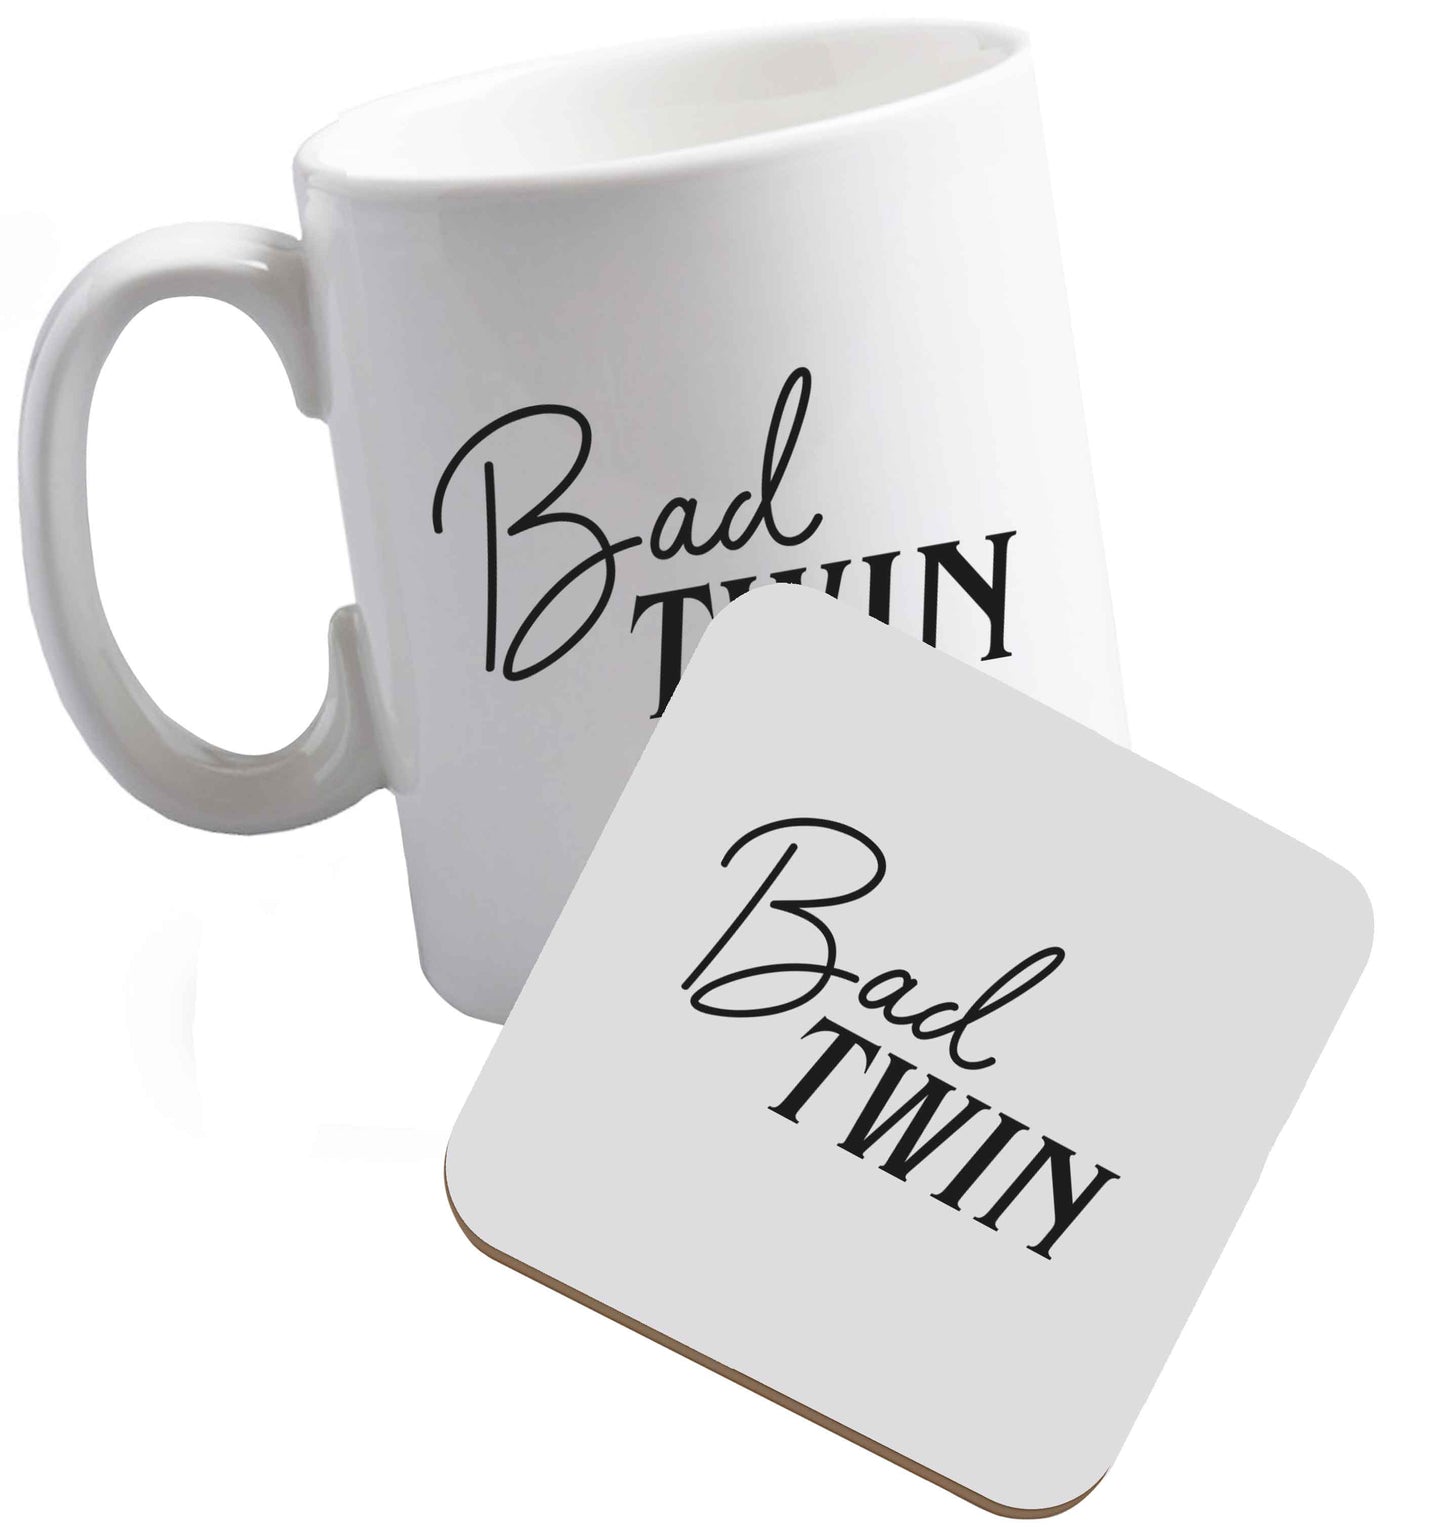 10 oz Bad twin ceramic mug and coaster set right handed